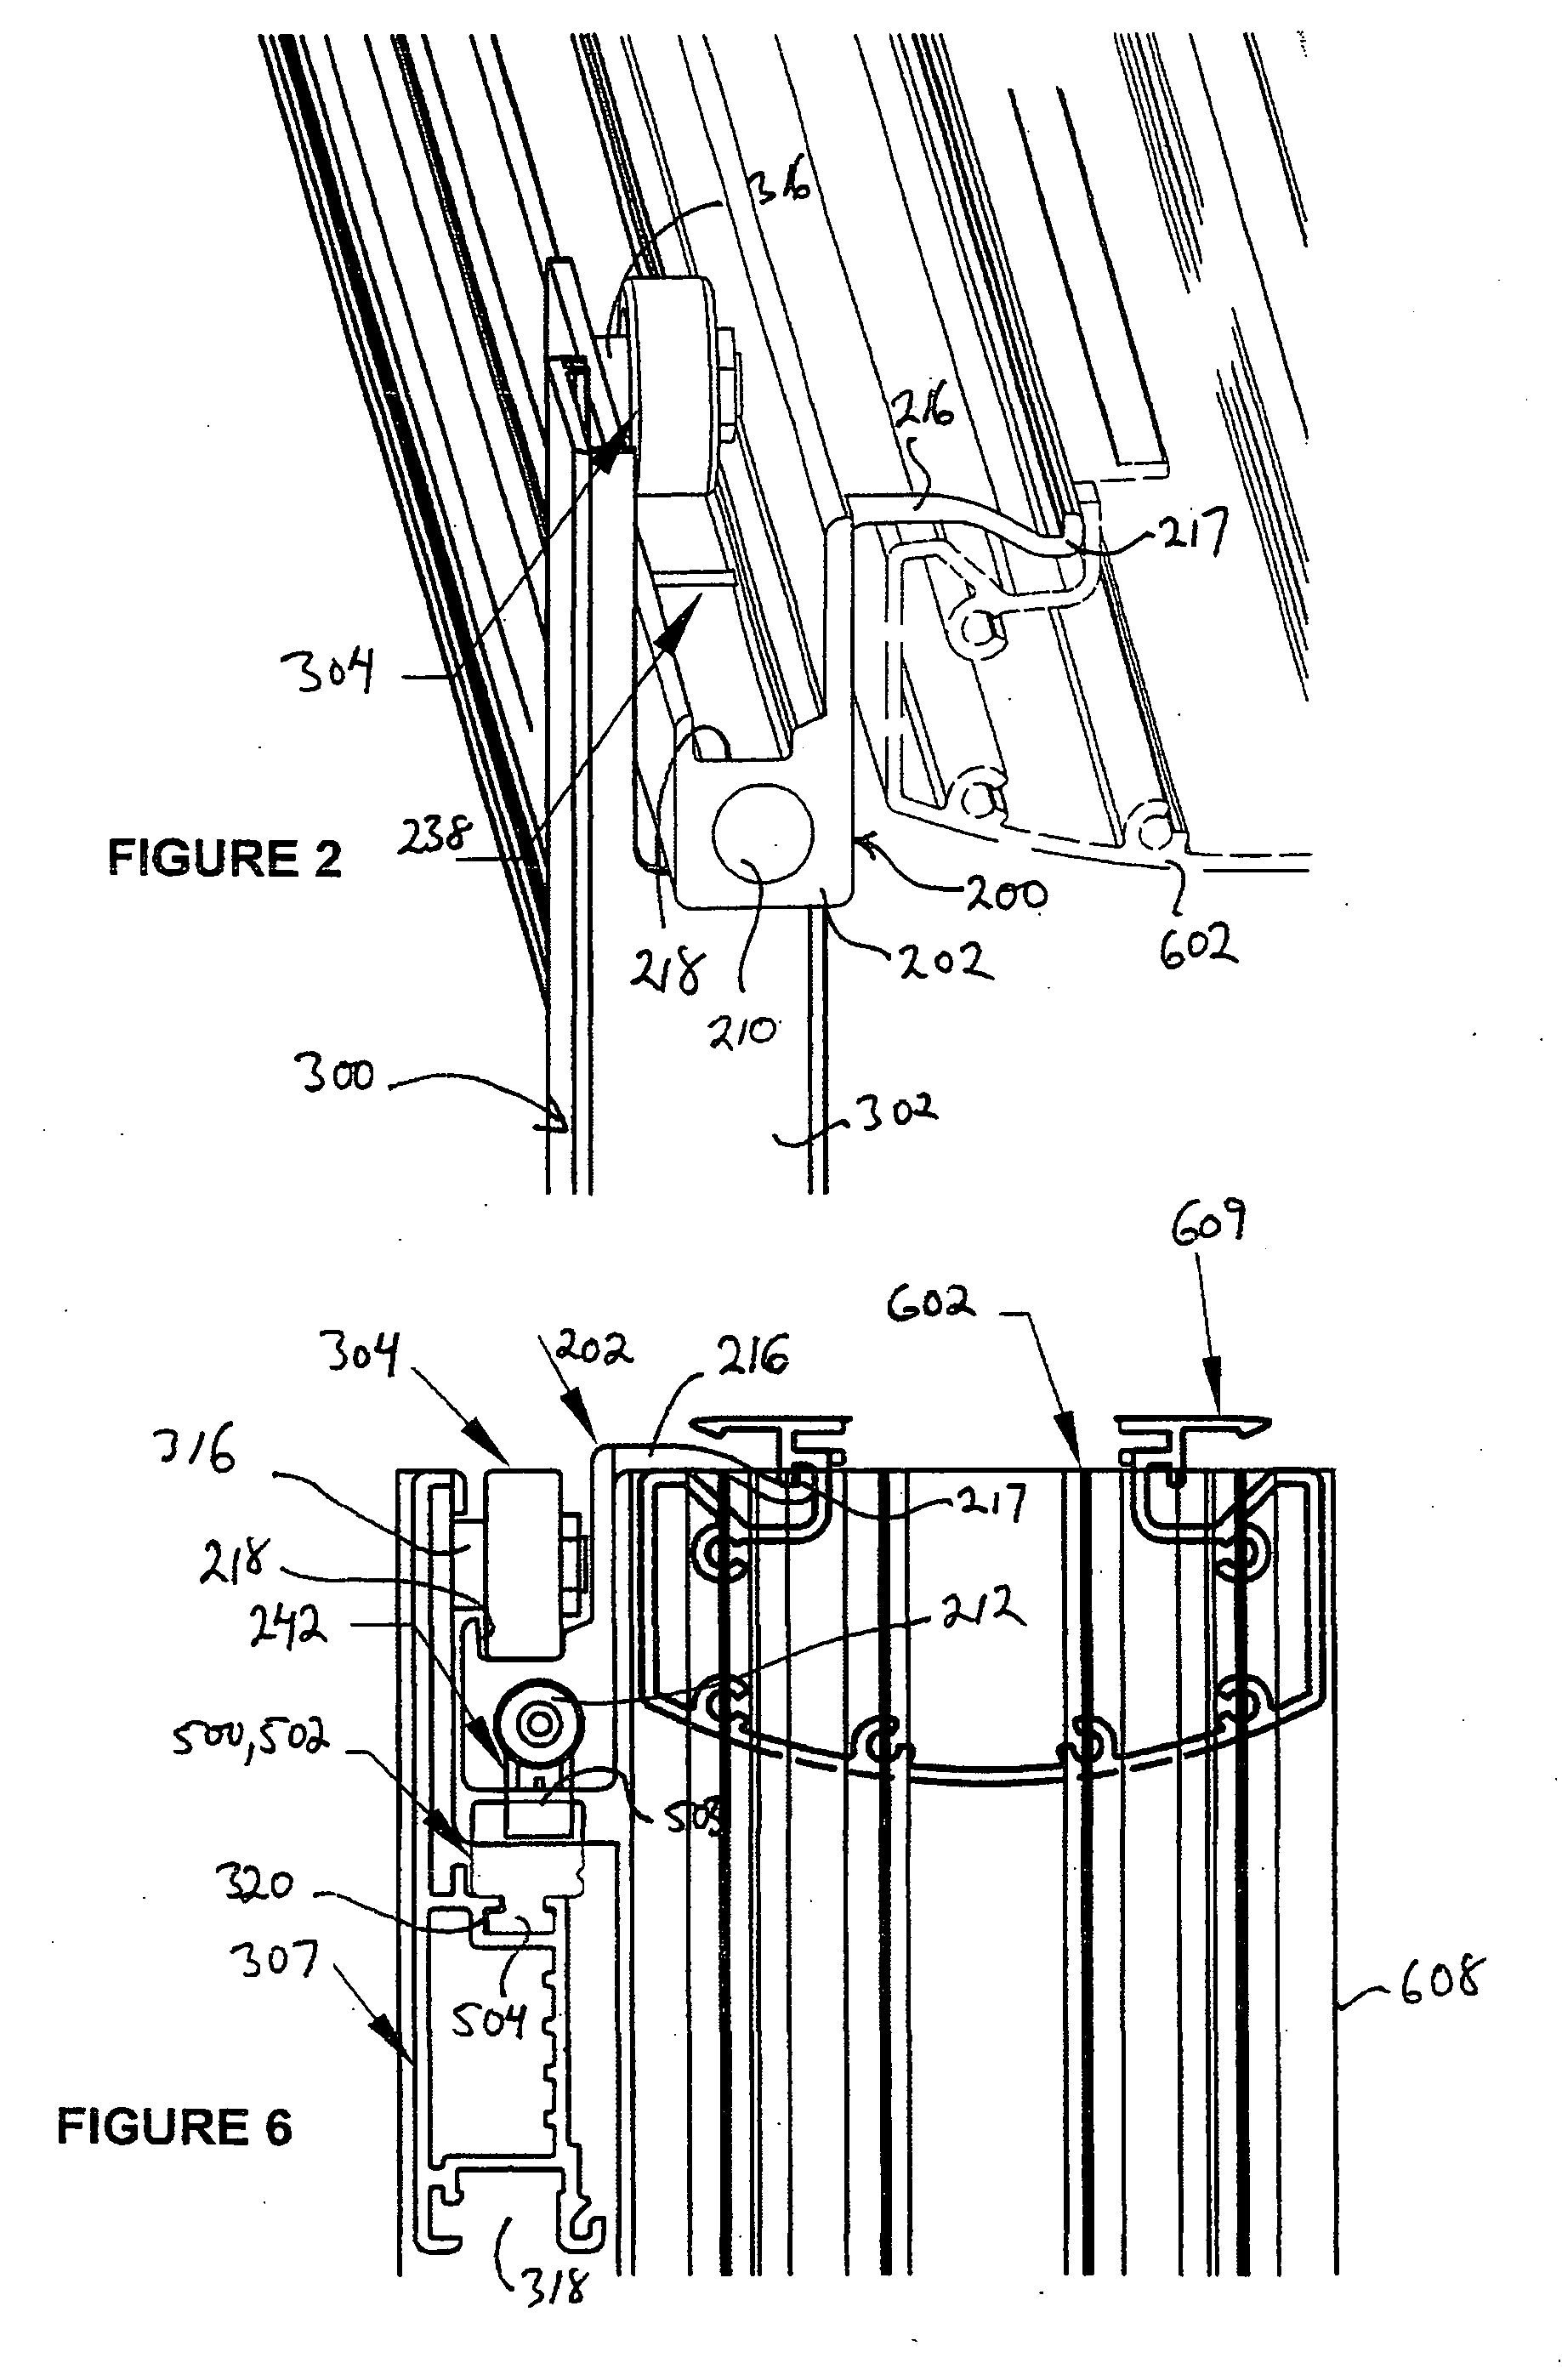 Integrated sliding door/panel system